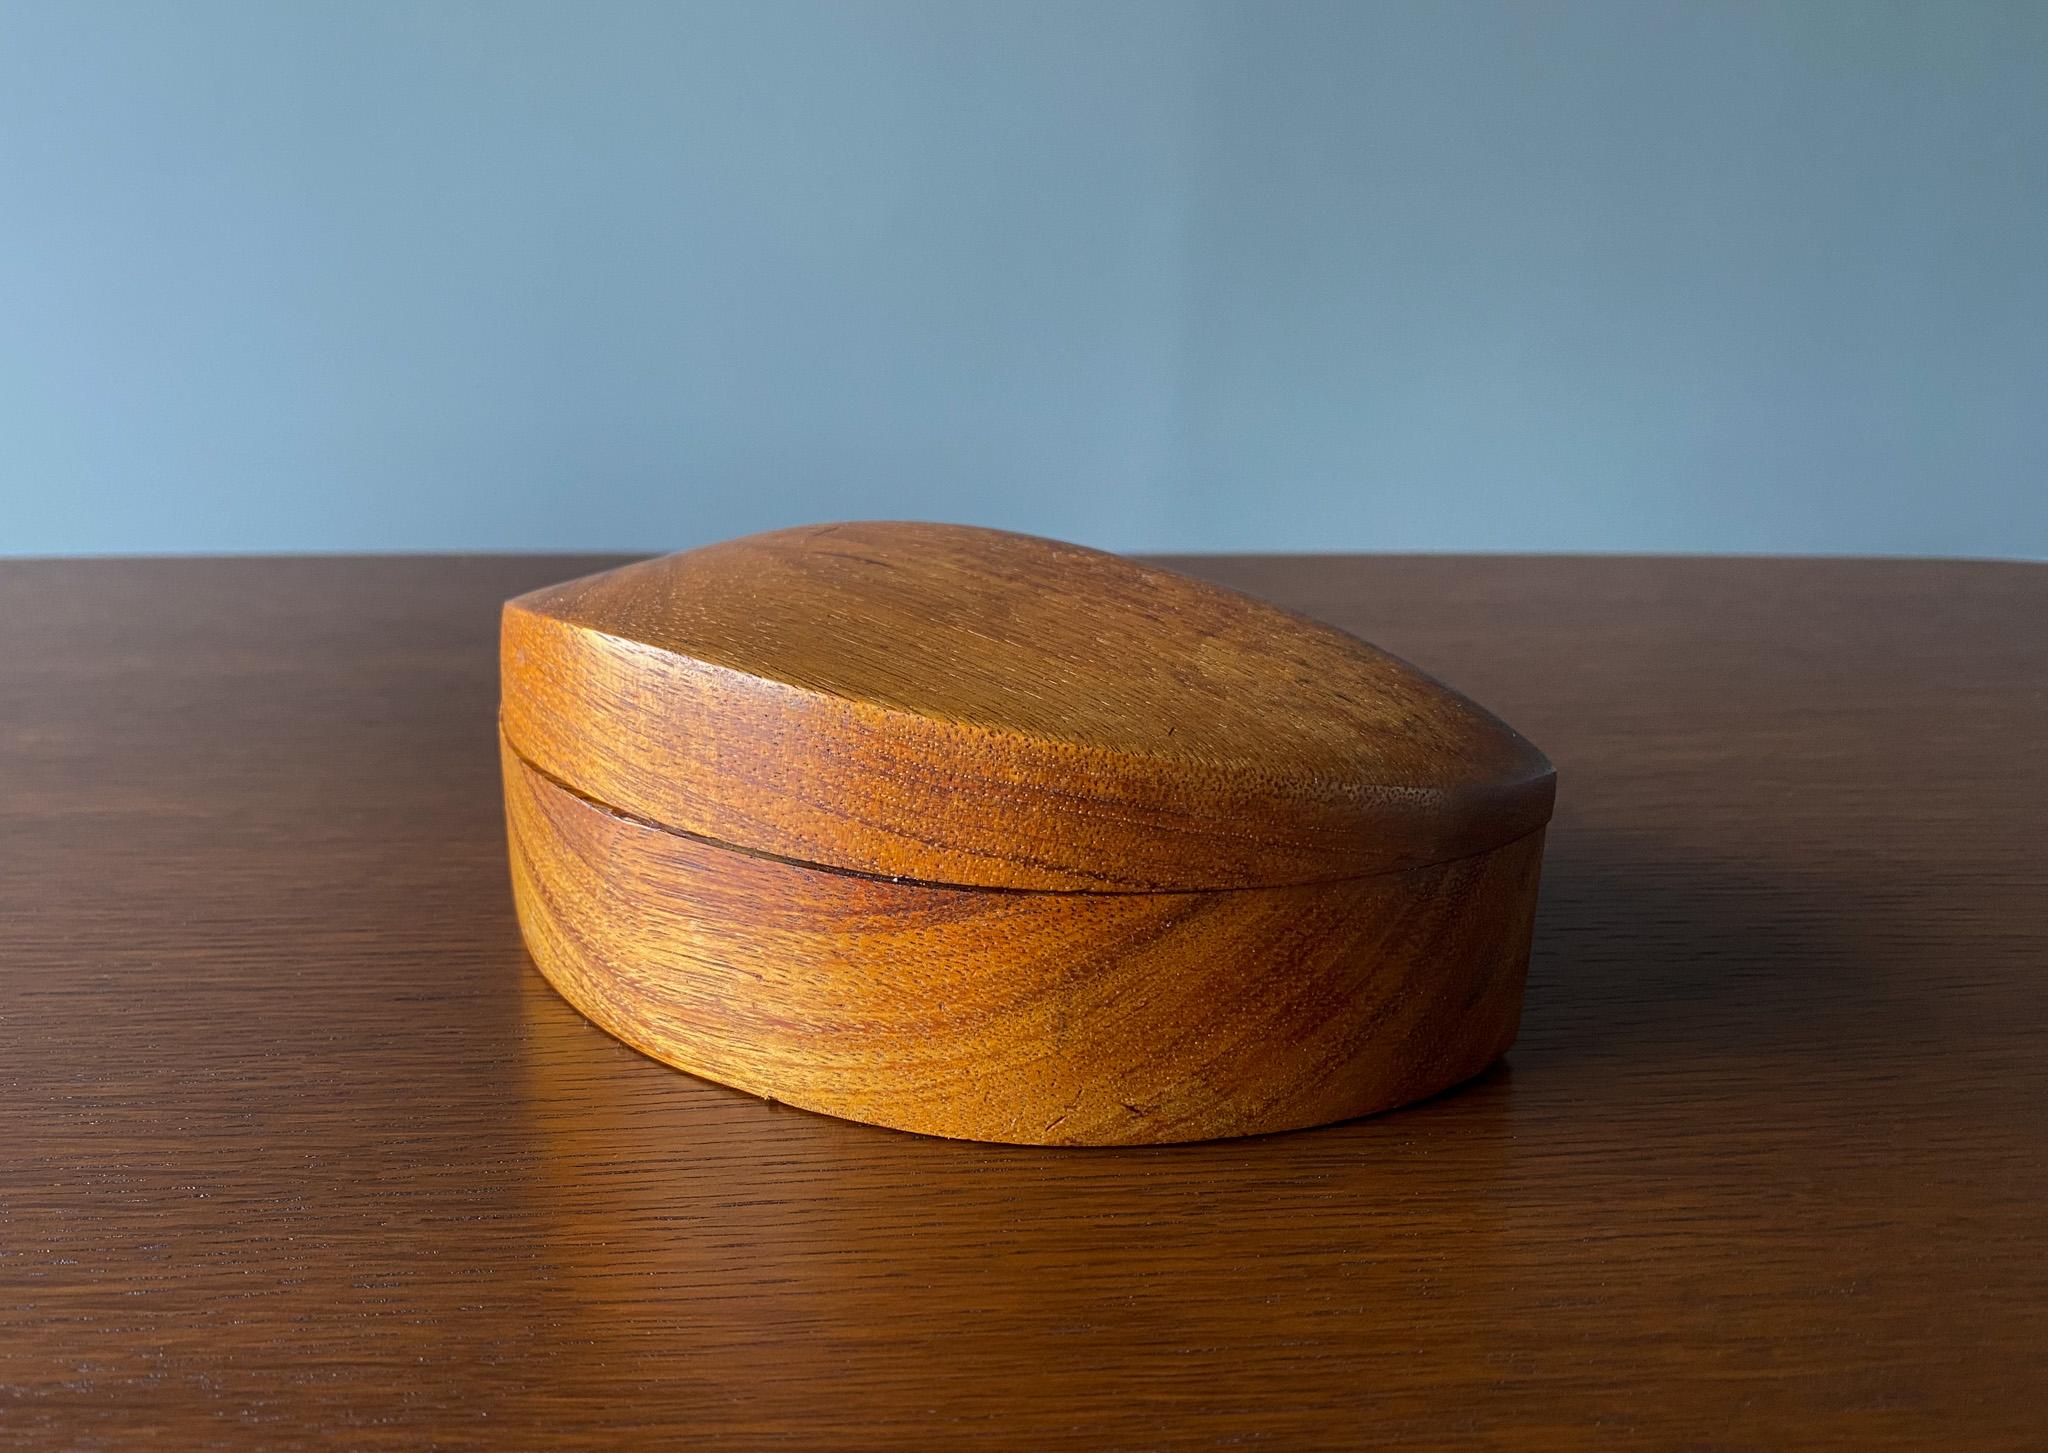 Po Shun Leong Handcrafted Koa Wood Box, USA, 1986.  Signed to the bottom.  